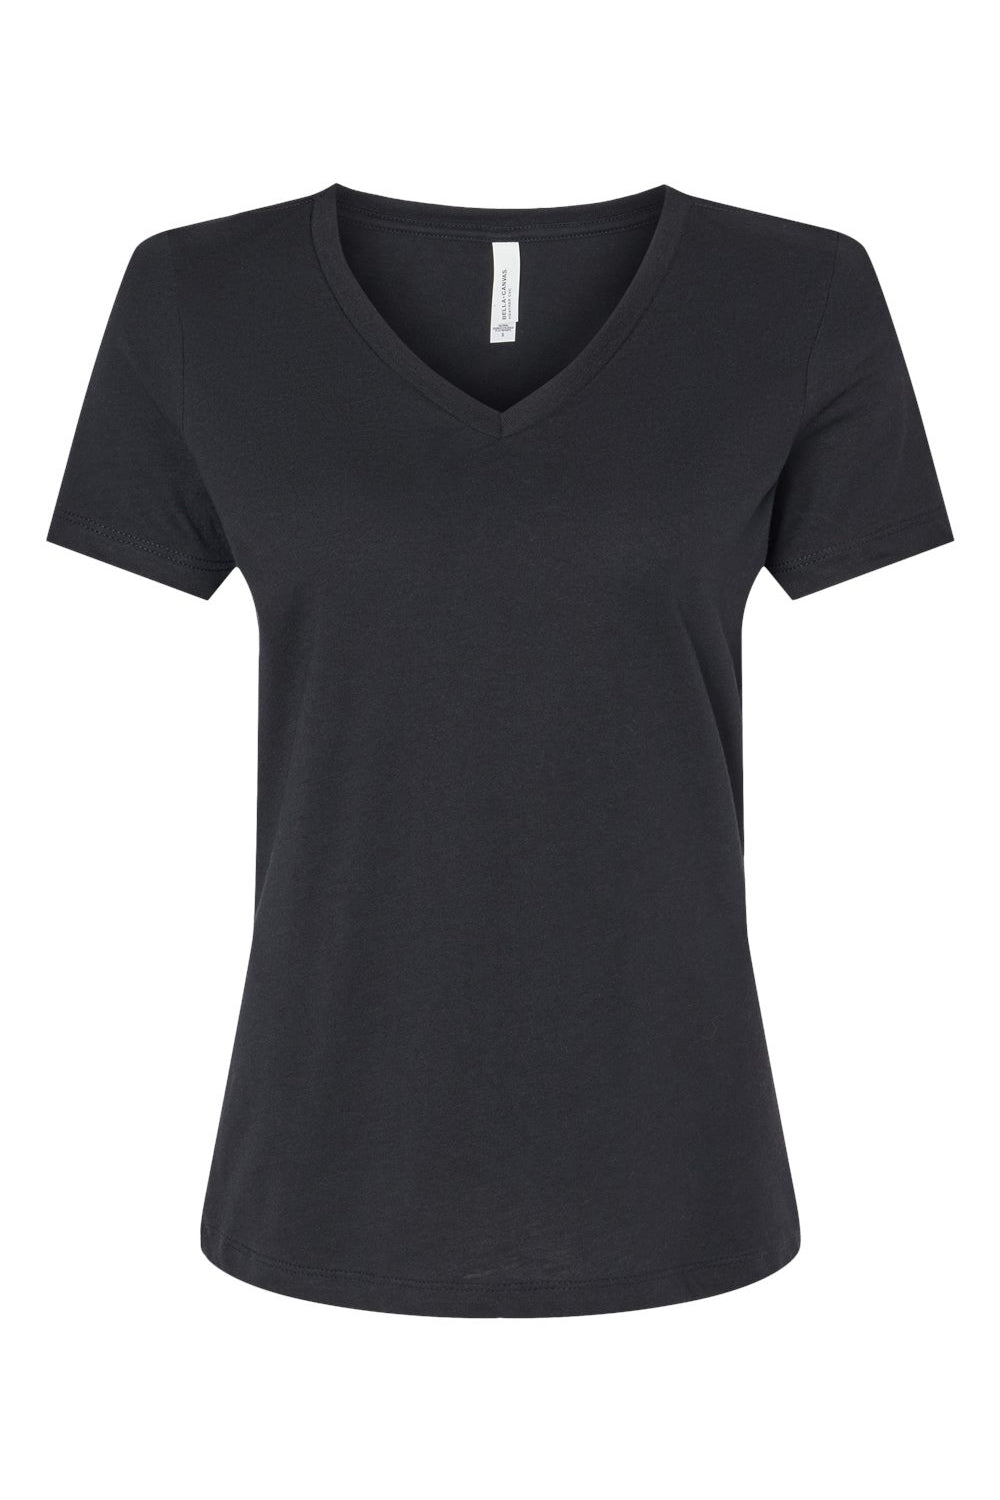 Bella + Canvas BC6405CVC Womens CVC Short Sleeve V-Neck T-Shirt Solid Black Flat Front